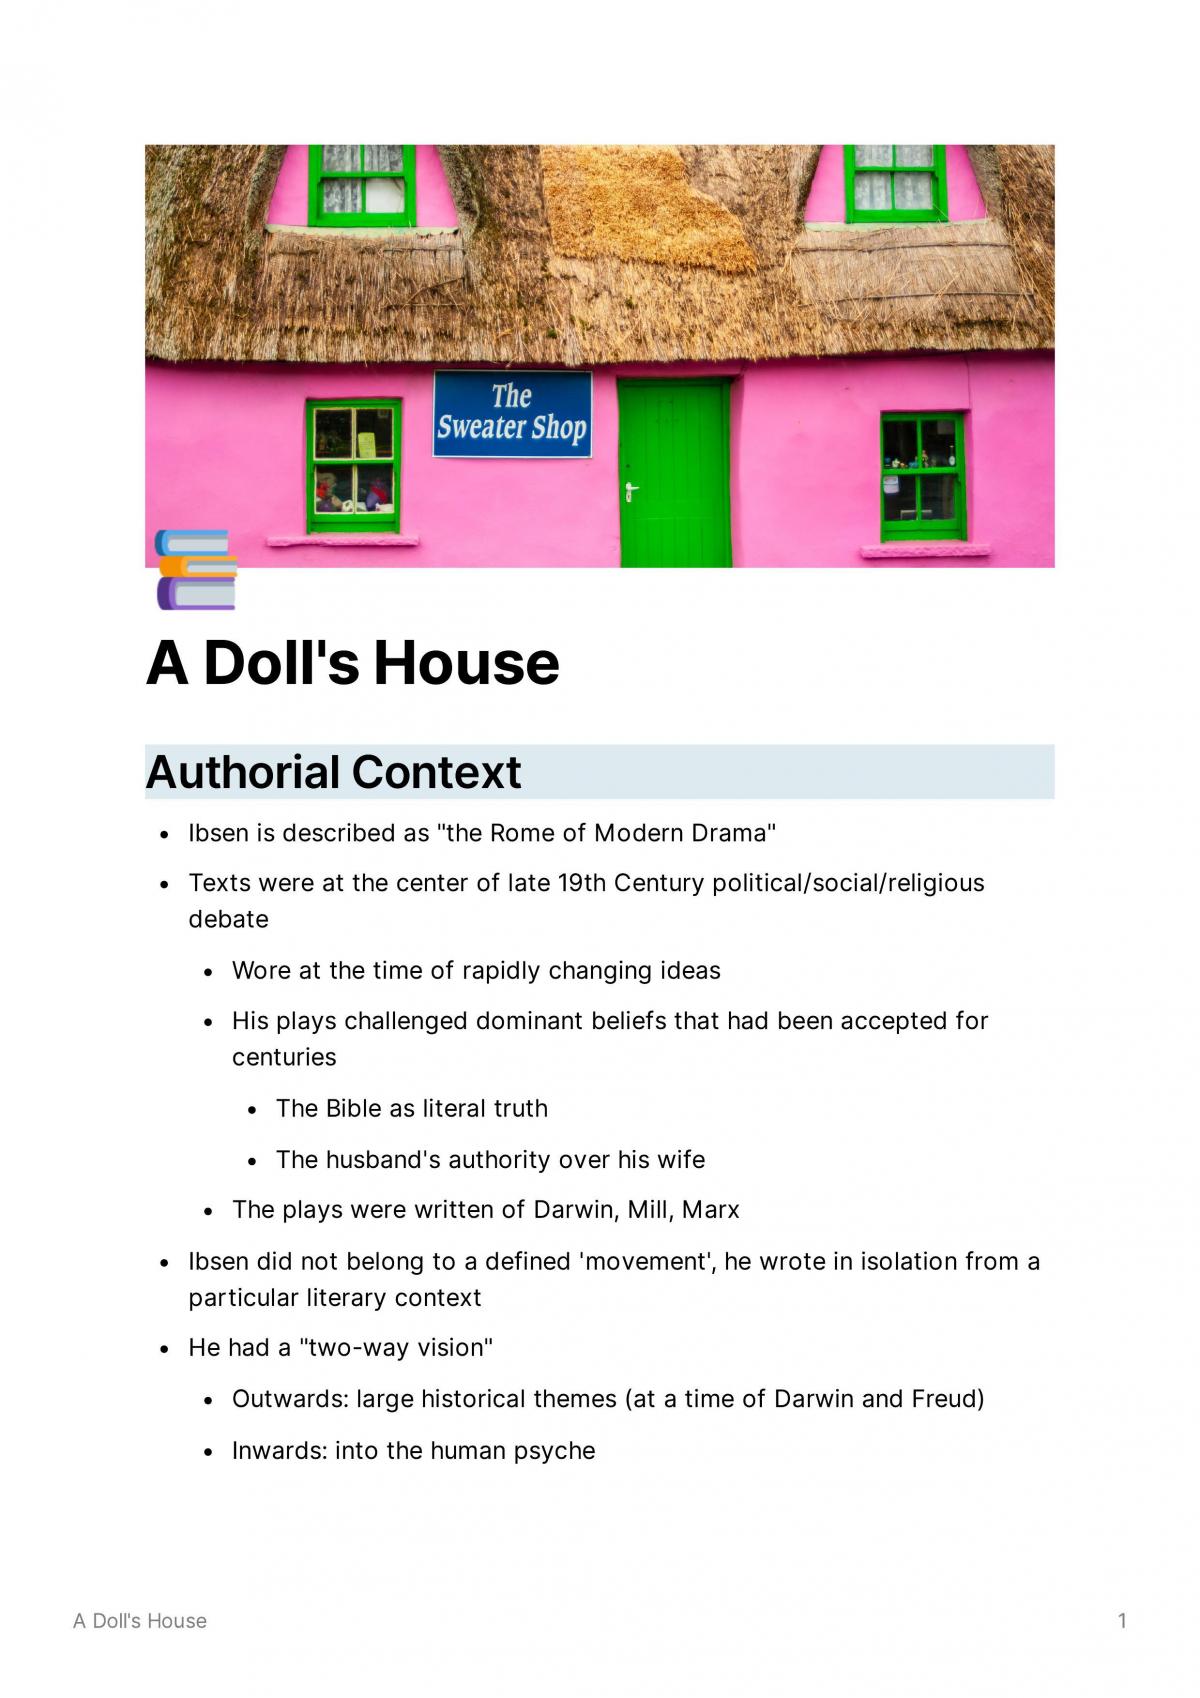 essay the dolls house